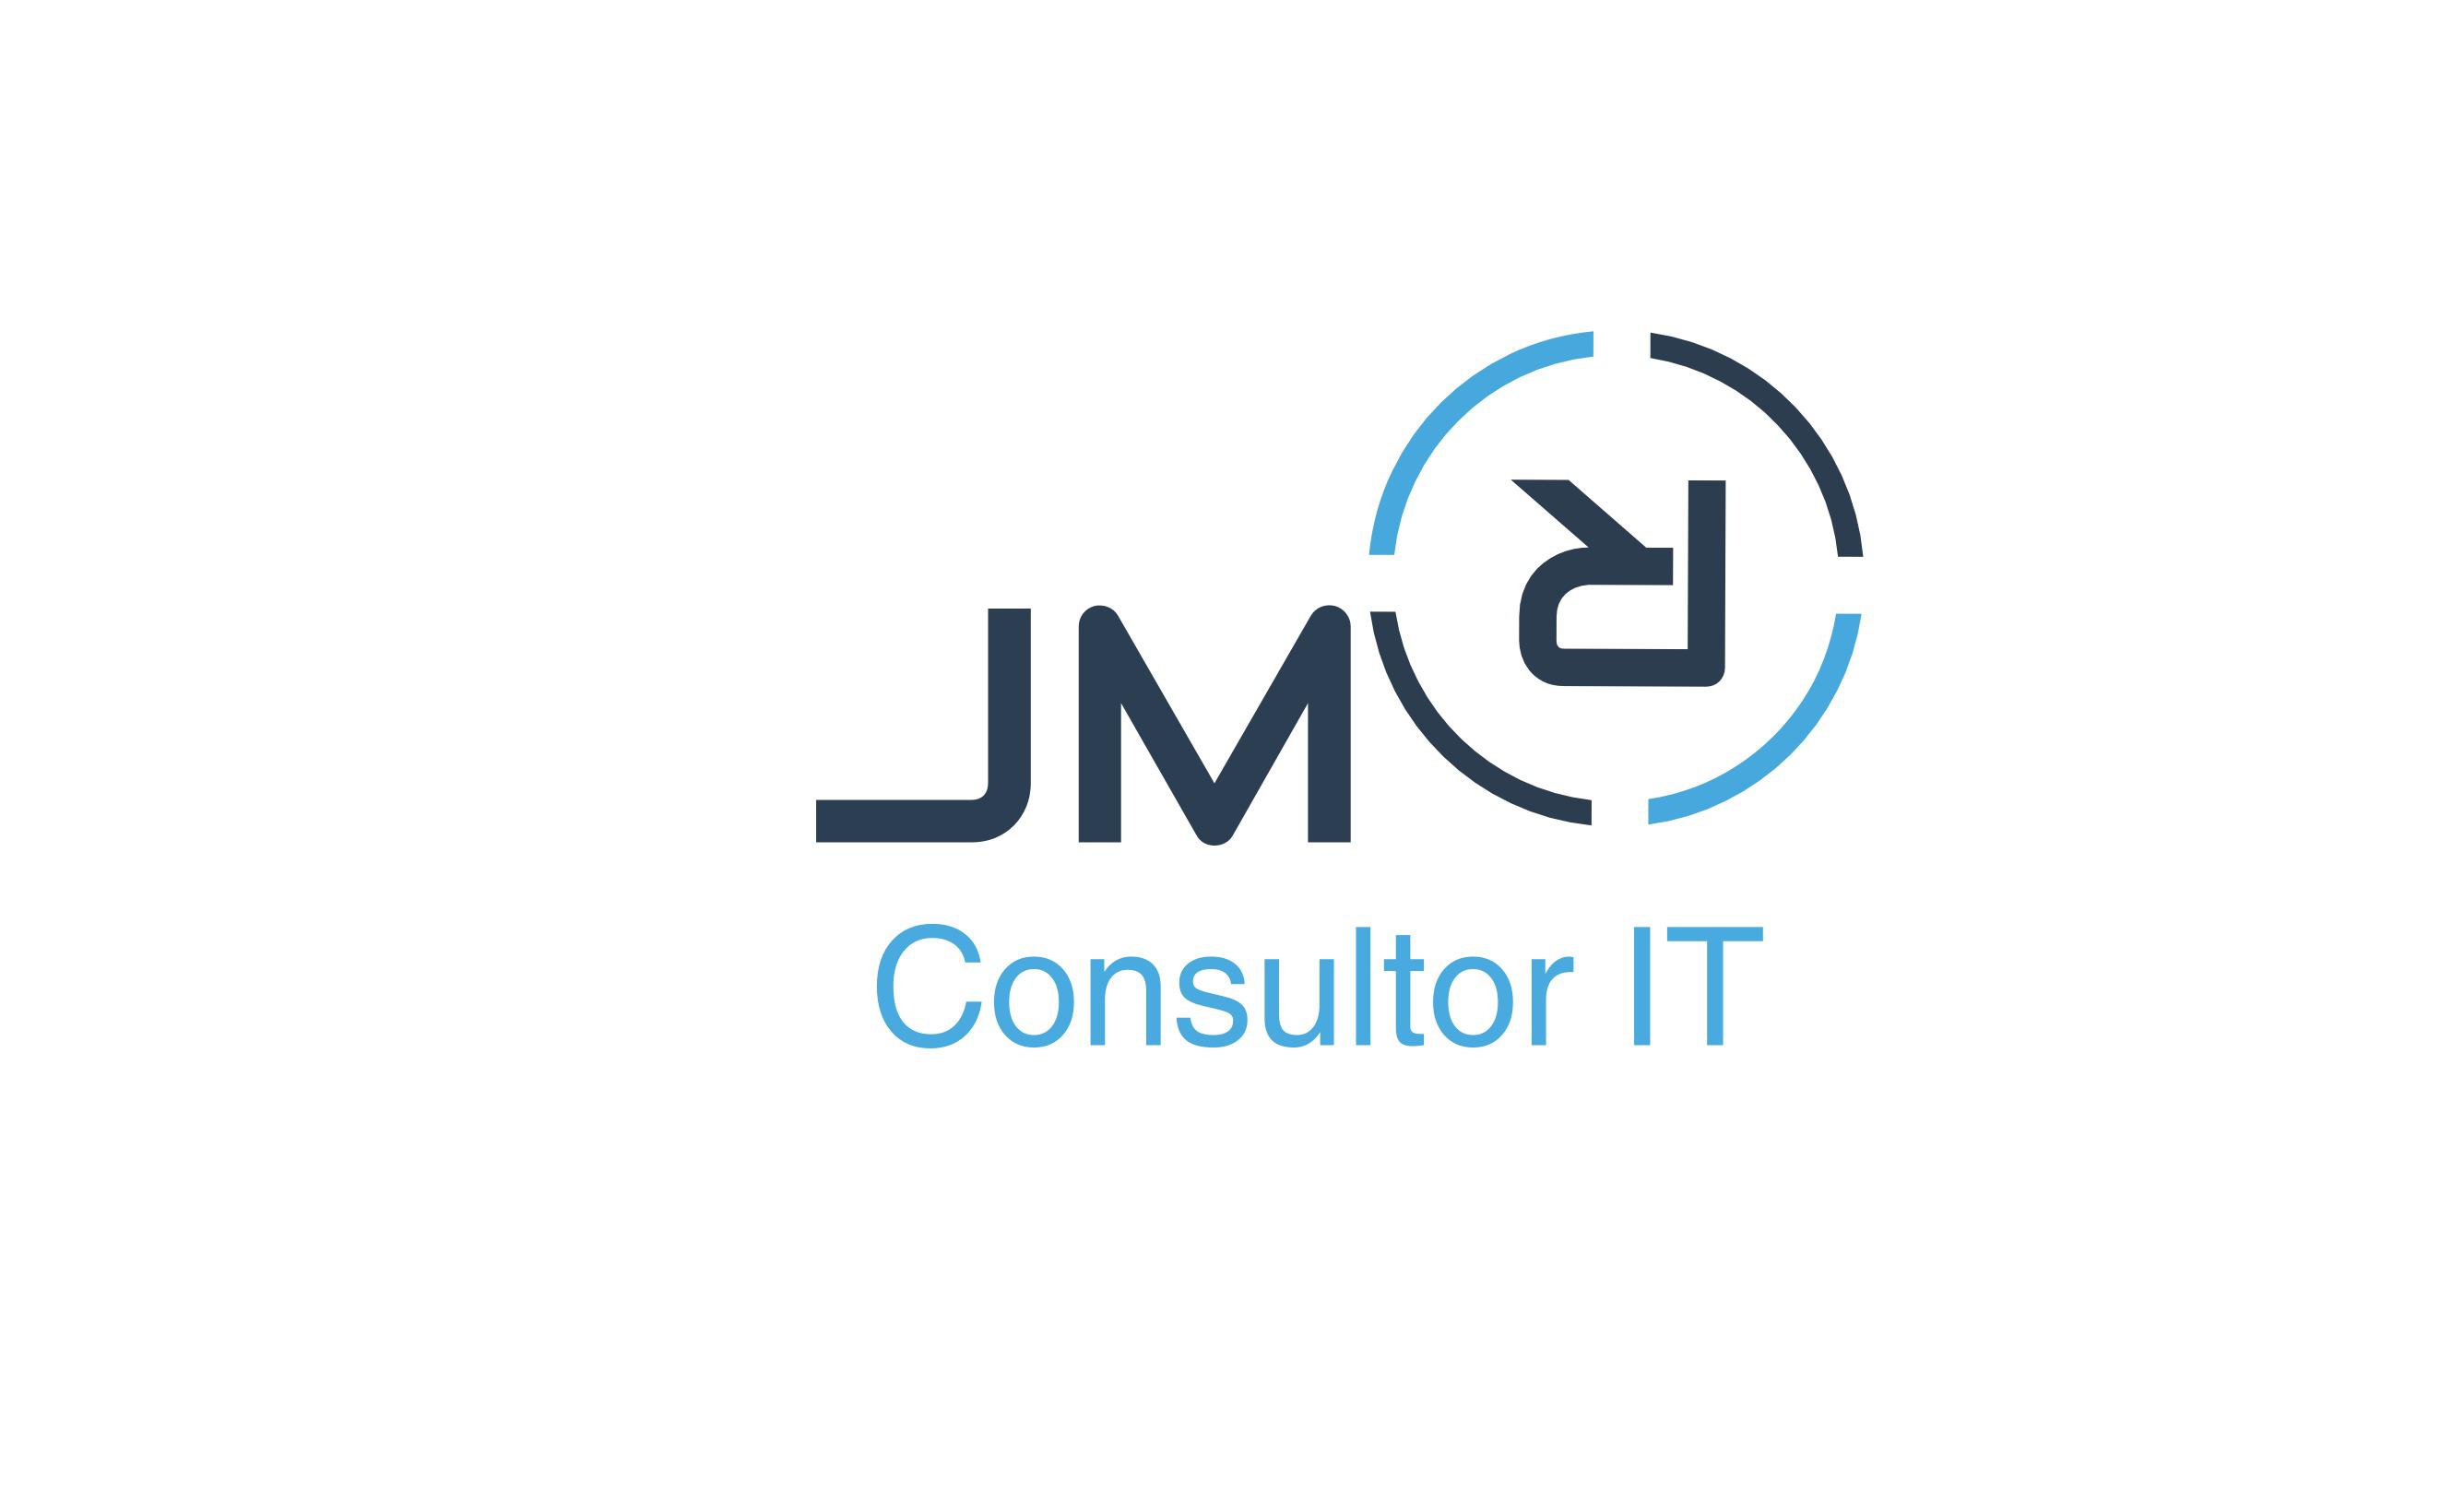 JMR Consultor IT Logo